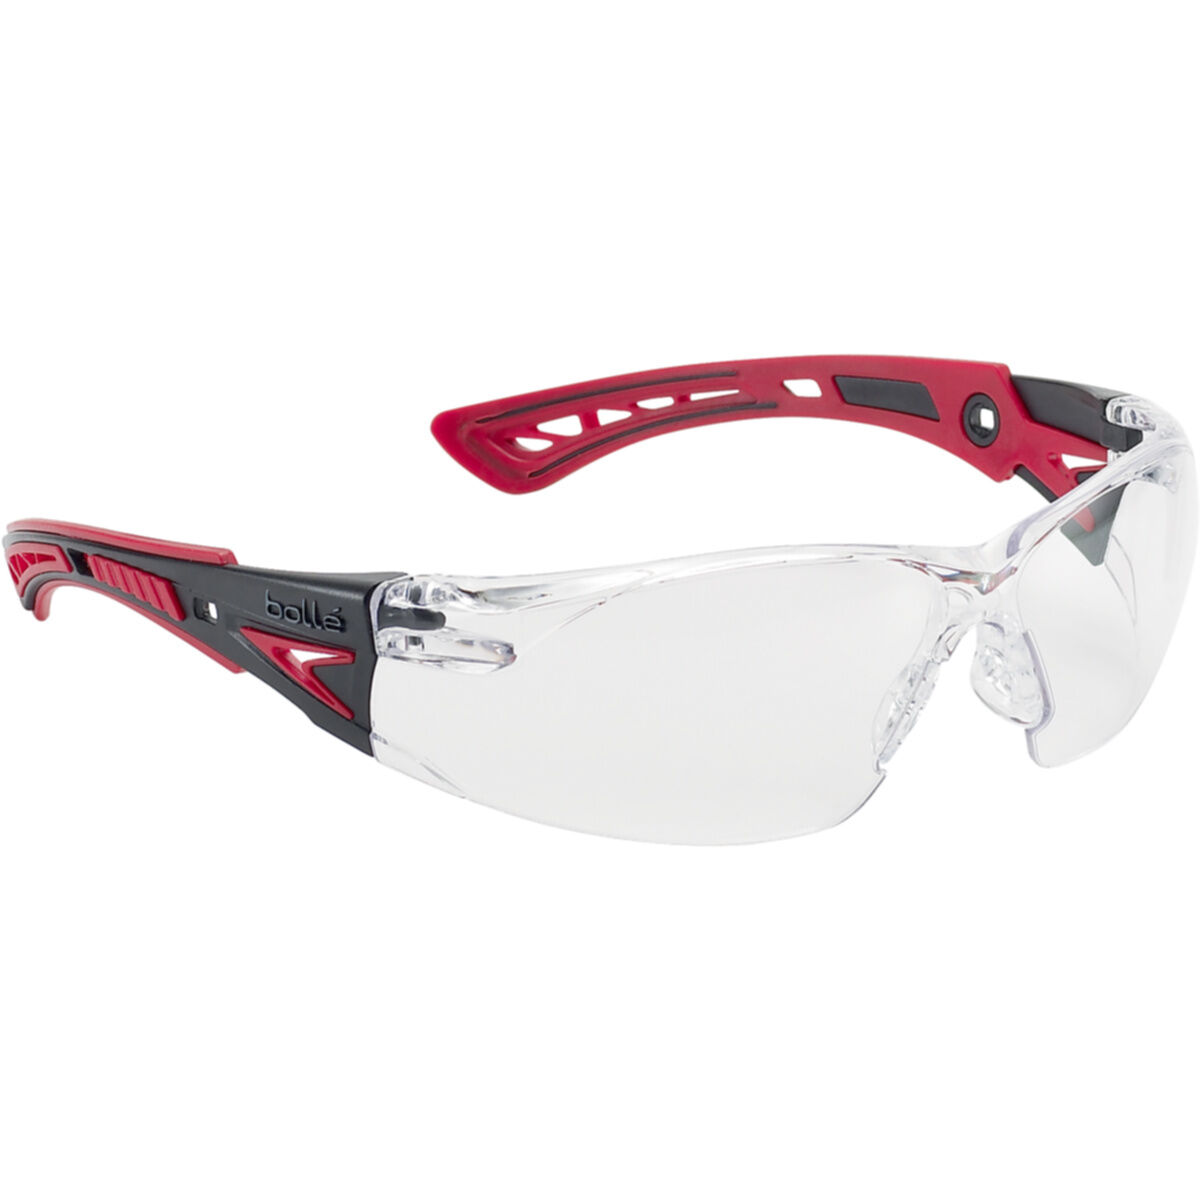 Smoke Lens Bolle RUSH+ Safety Glasses RUSHPPSF UV Eye Protection 